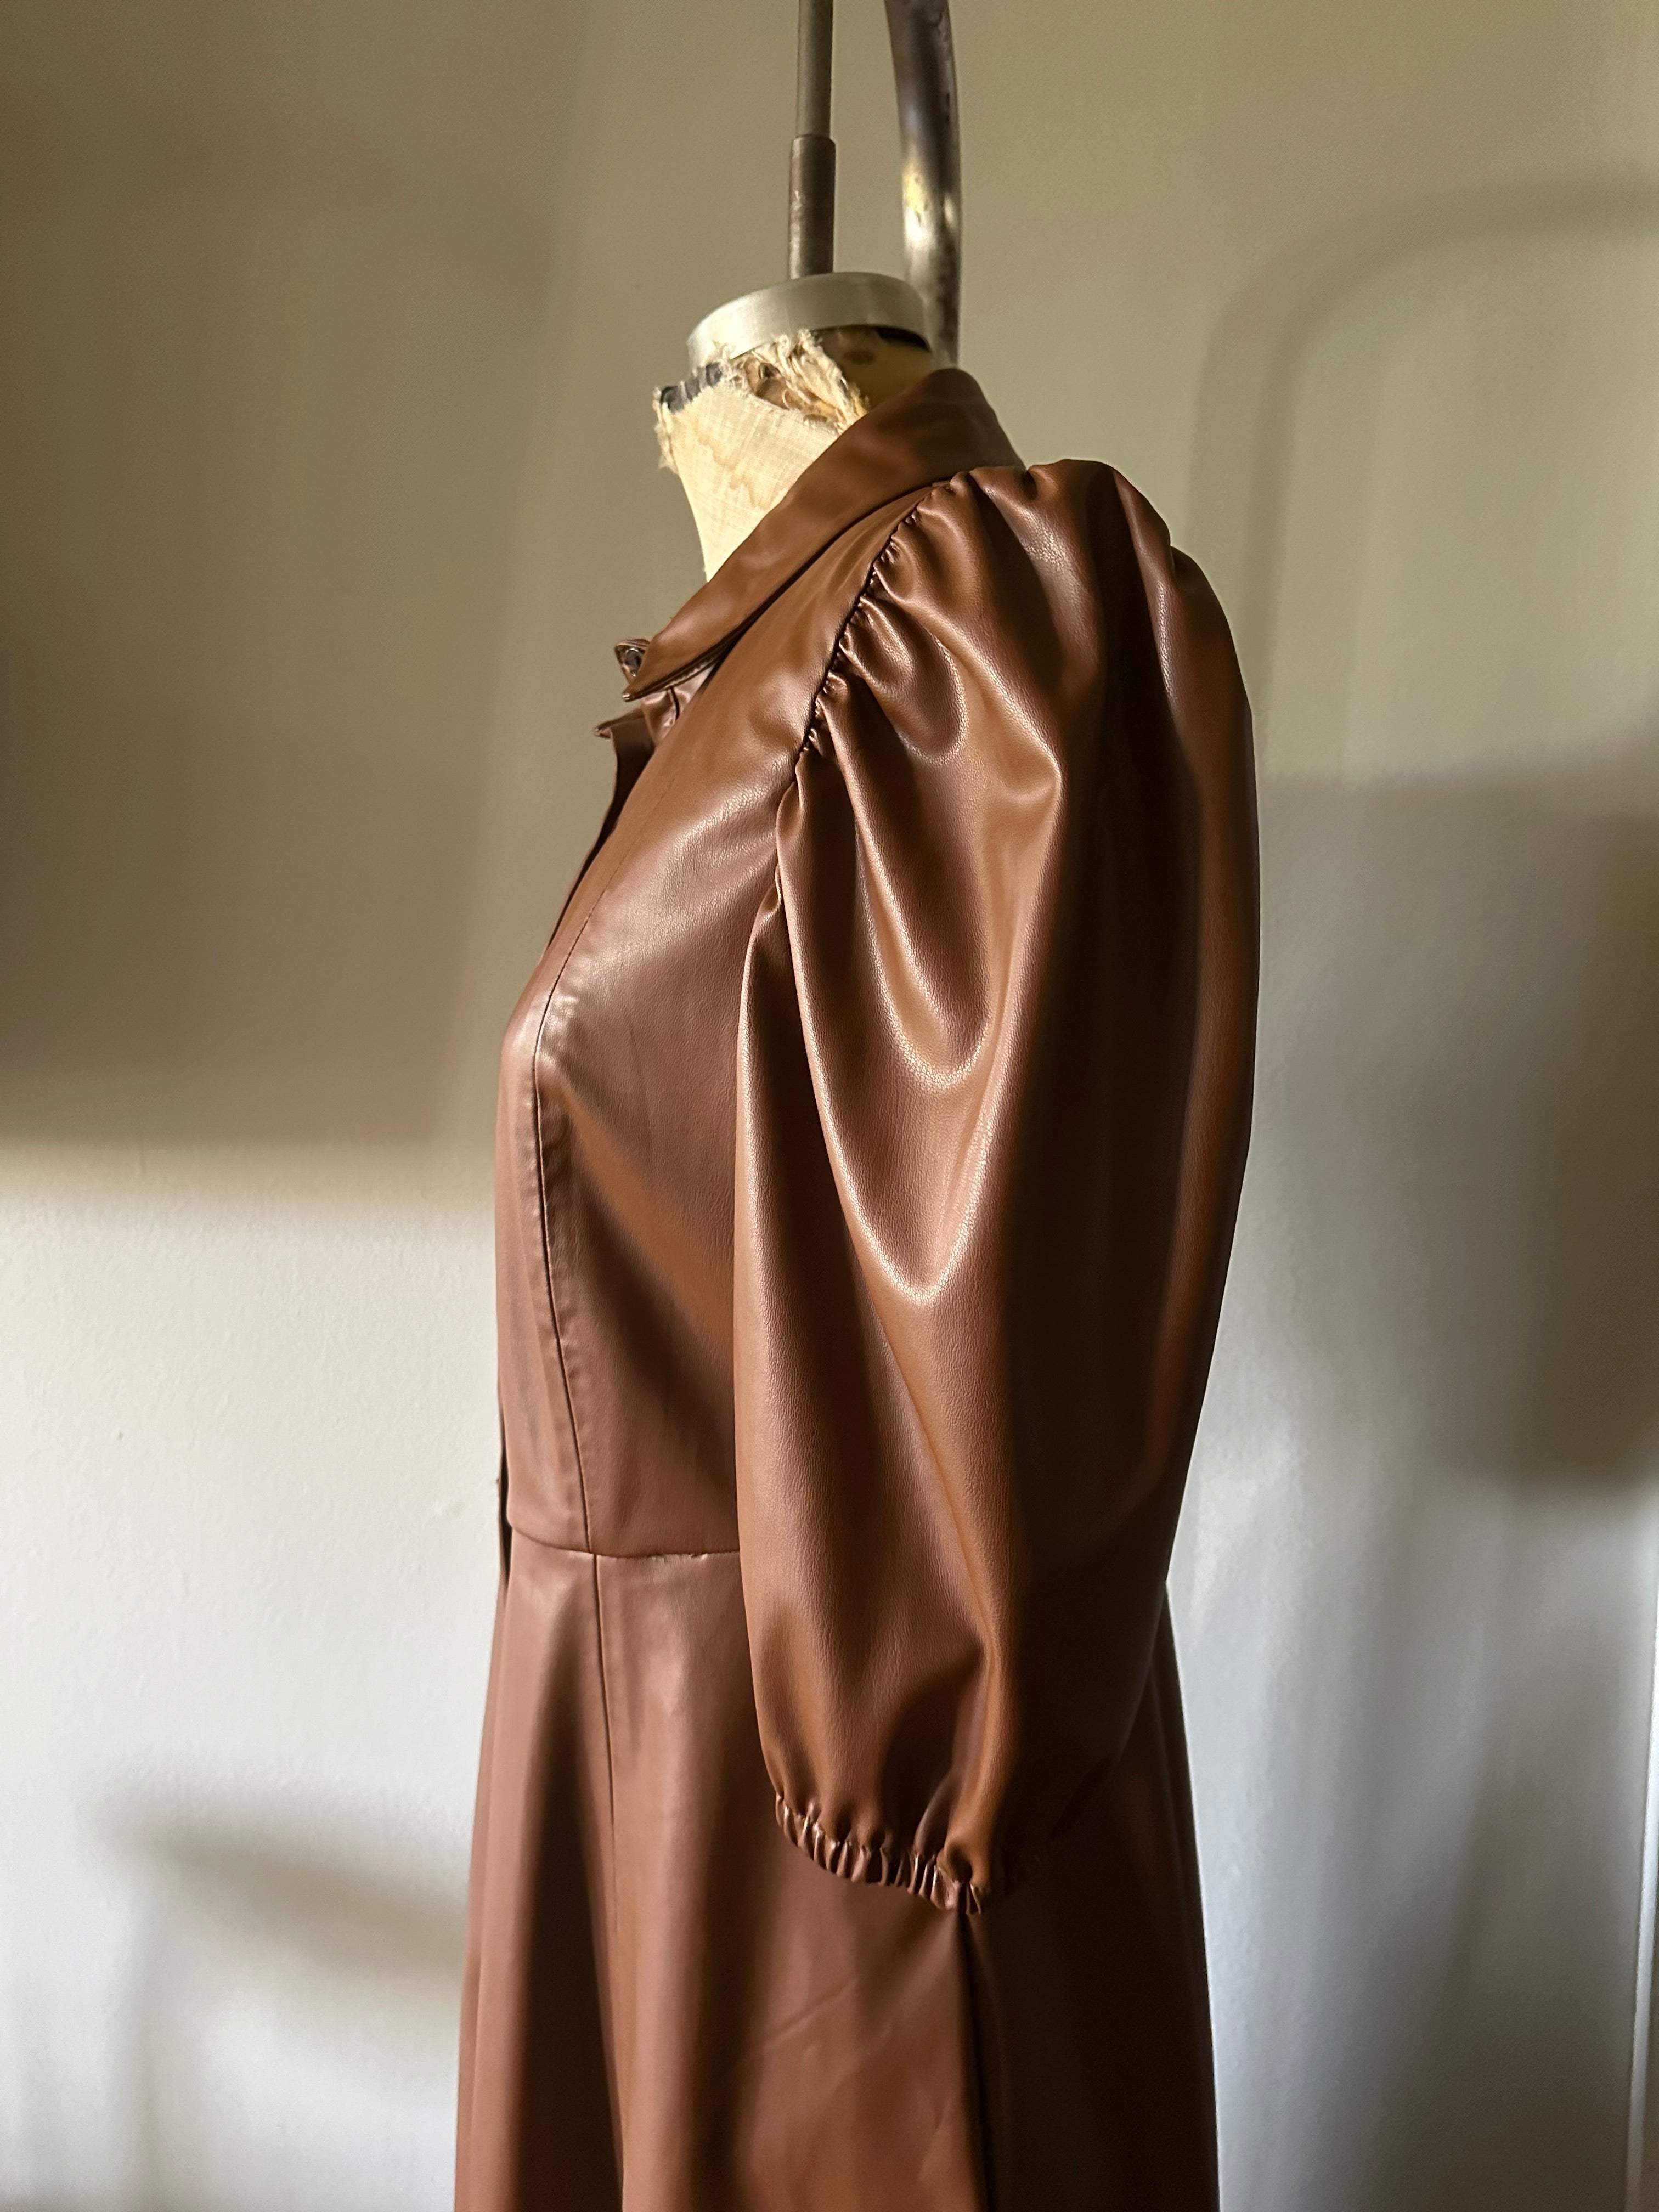 Zara Brown Faux Leather Midi Secretary Dress Large Sheath Dress